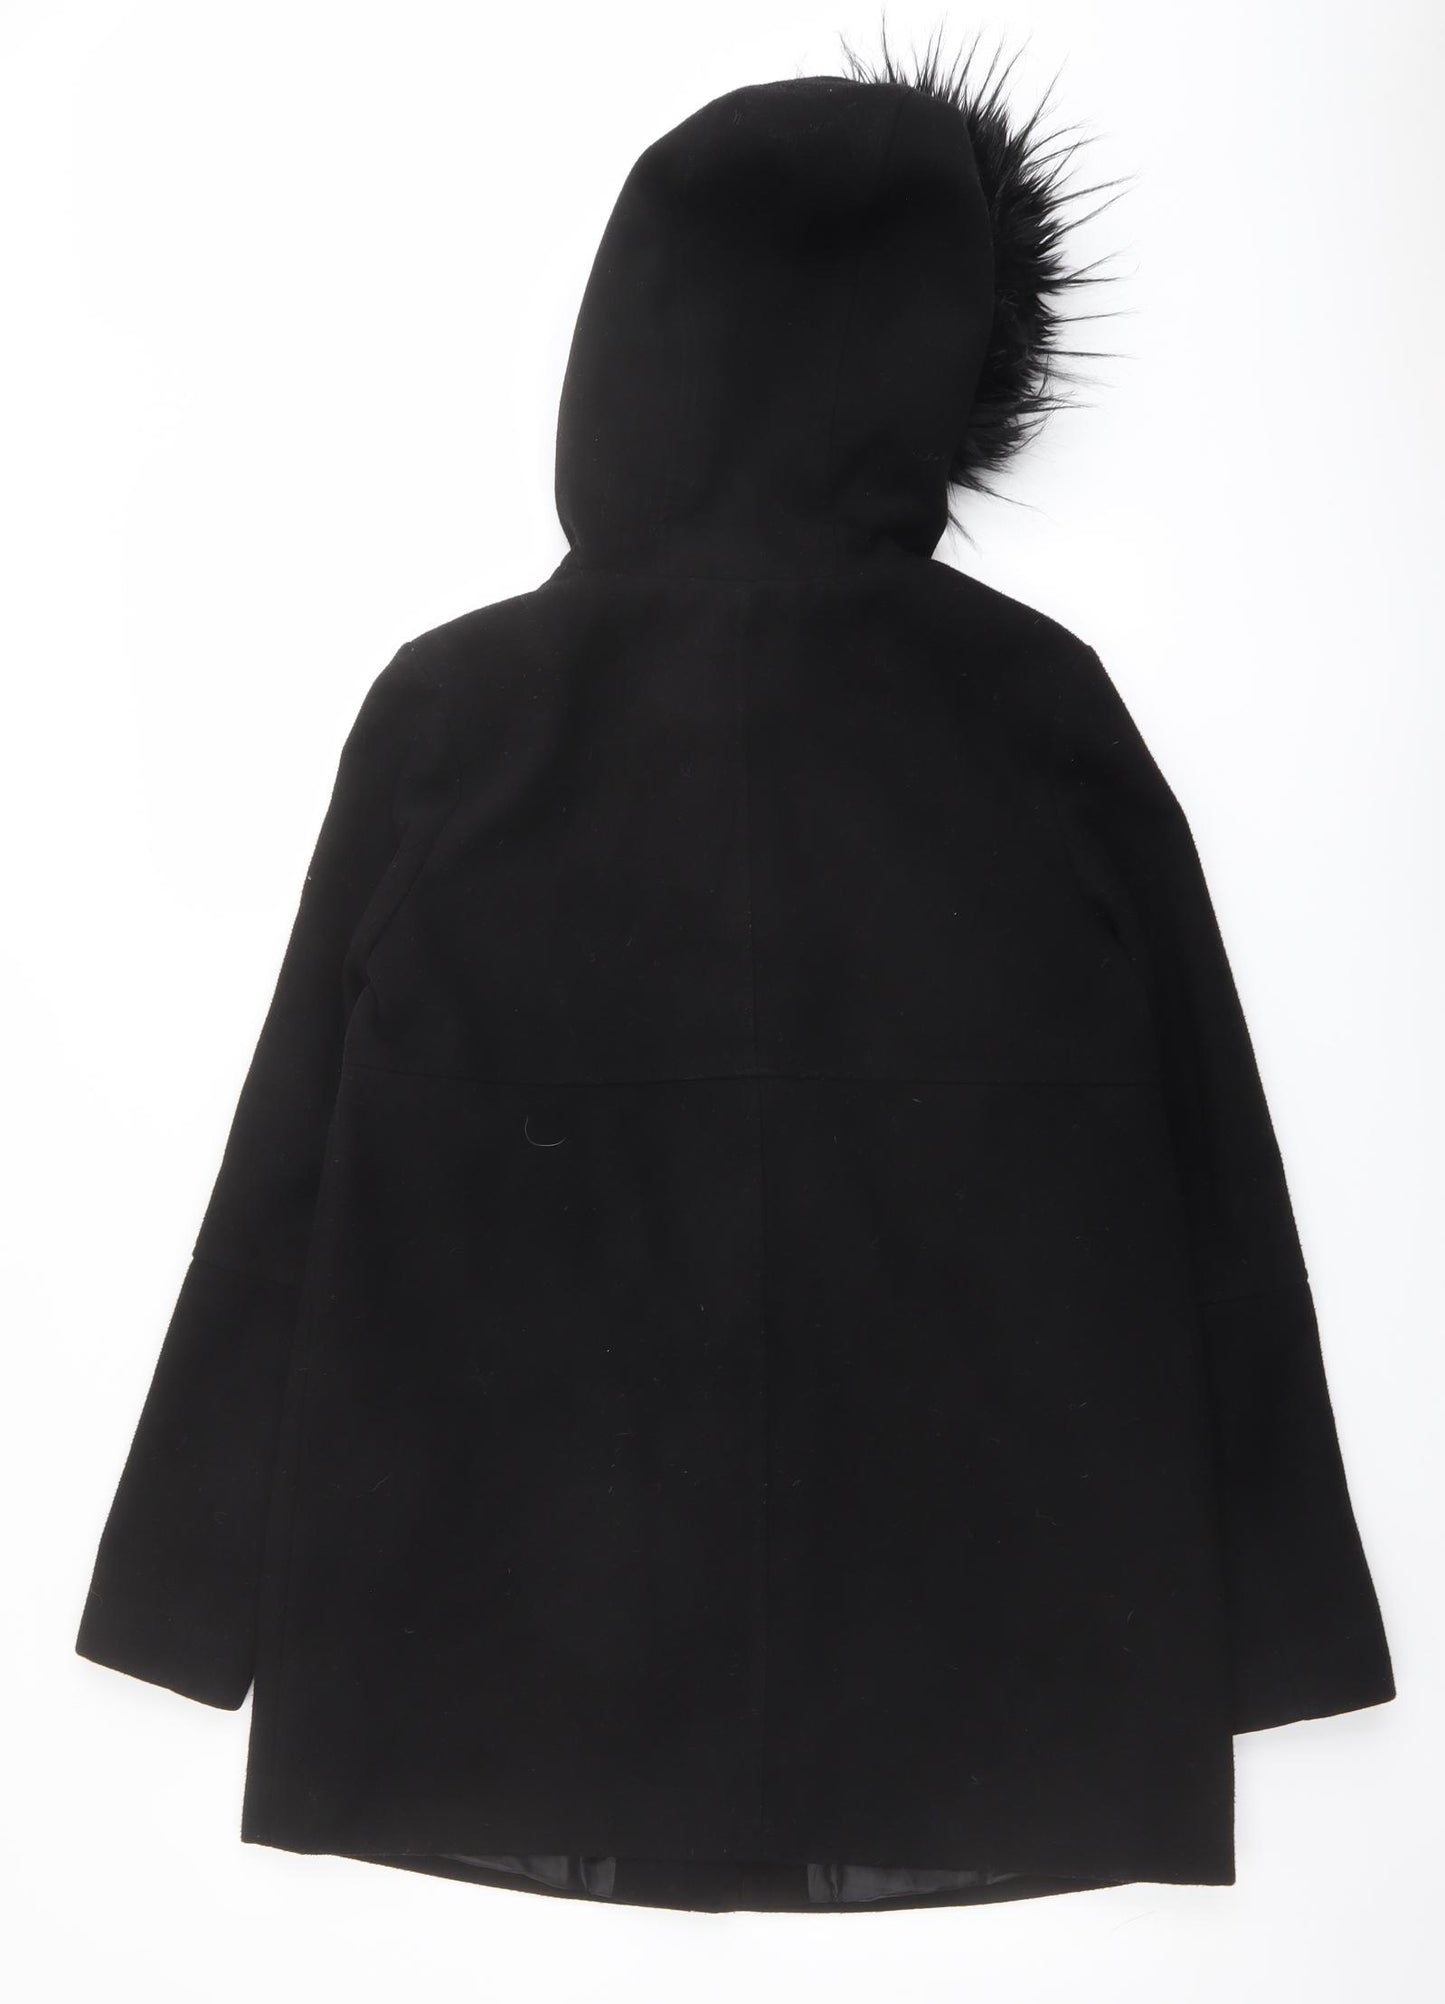 River Island Womens Black Pea Coat Coat Size 6 Zip